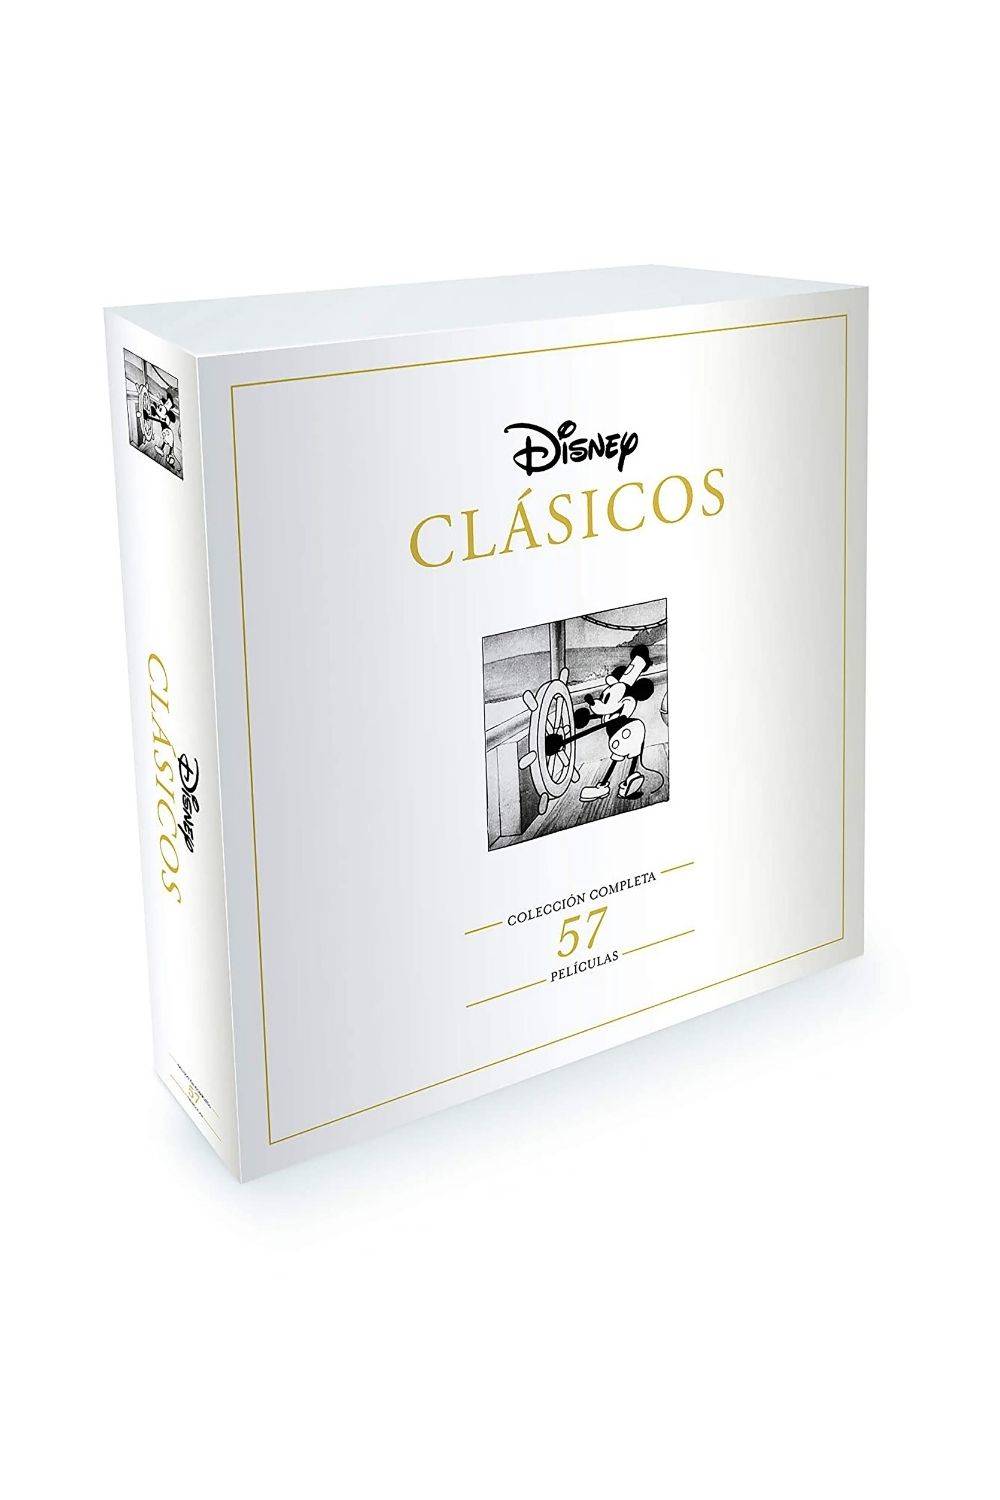 Disney Clásicos - Colección completa 57 películas [DVD] - Edición Exclusiva de Amazon